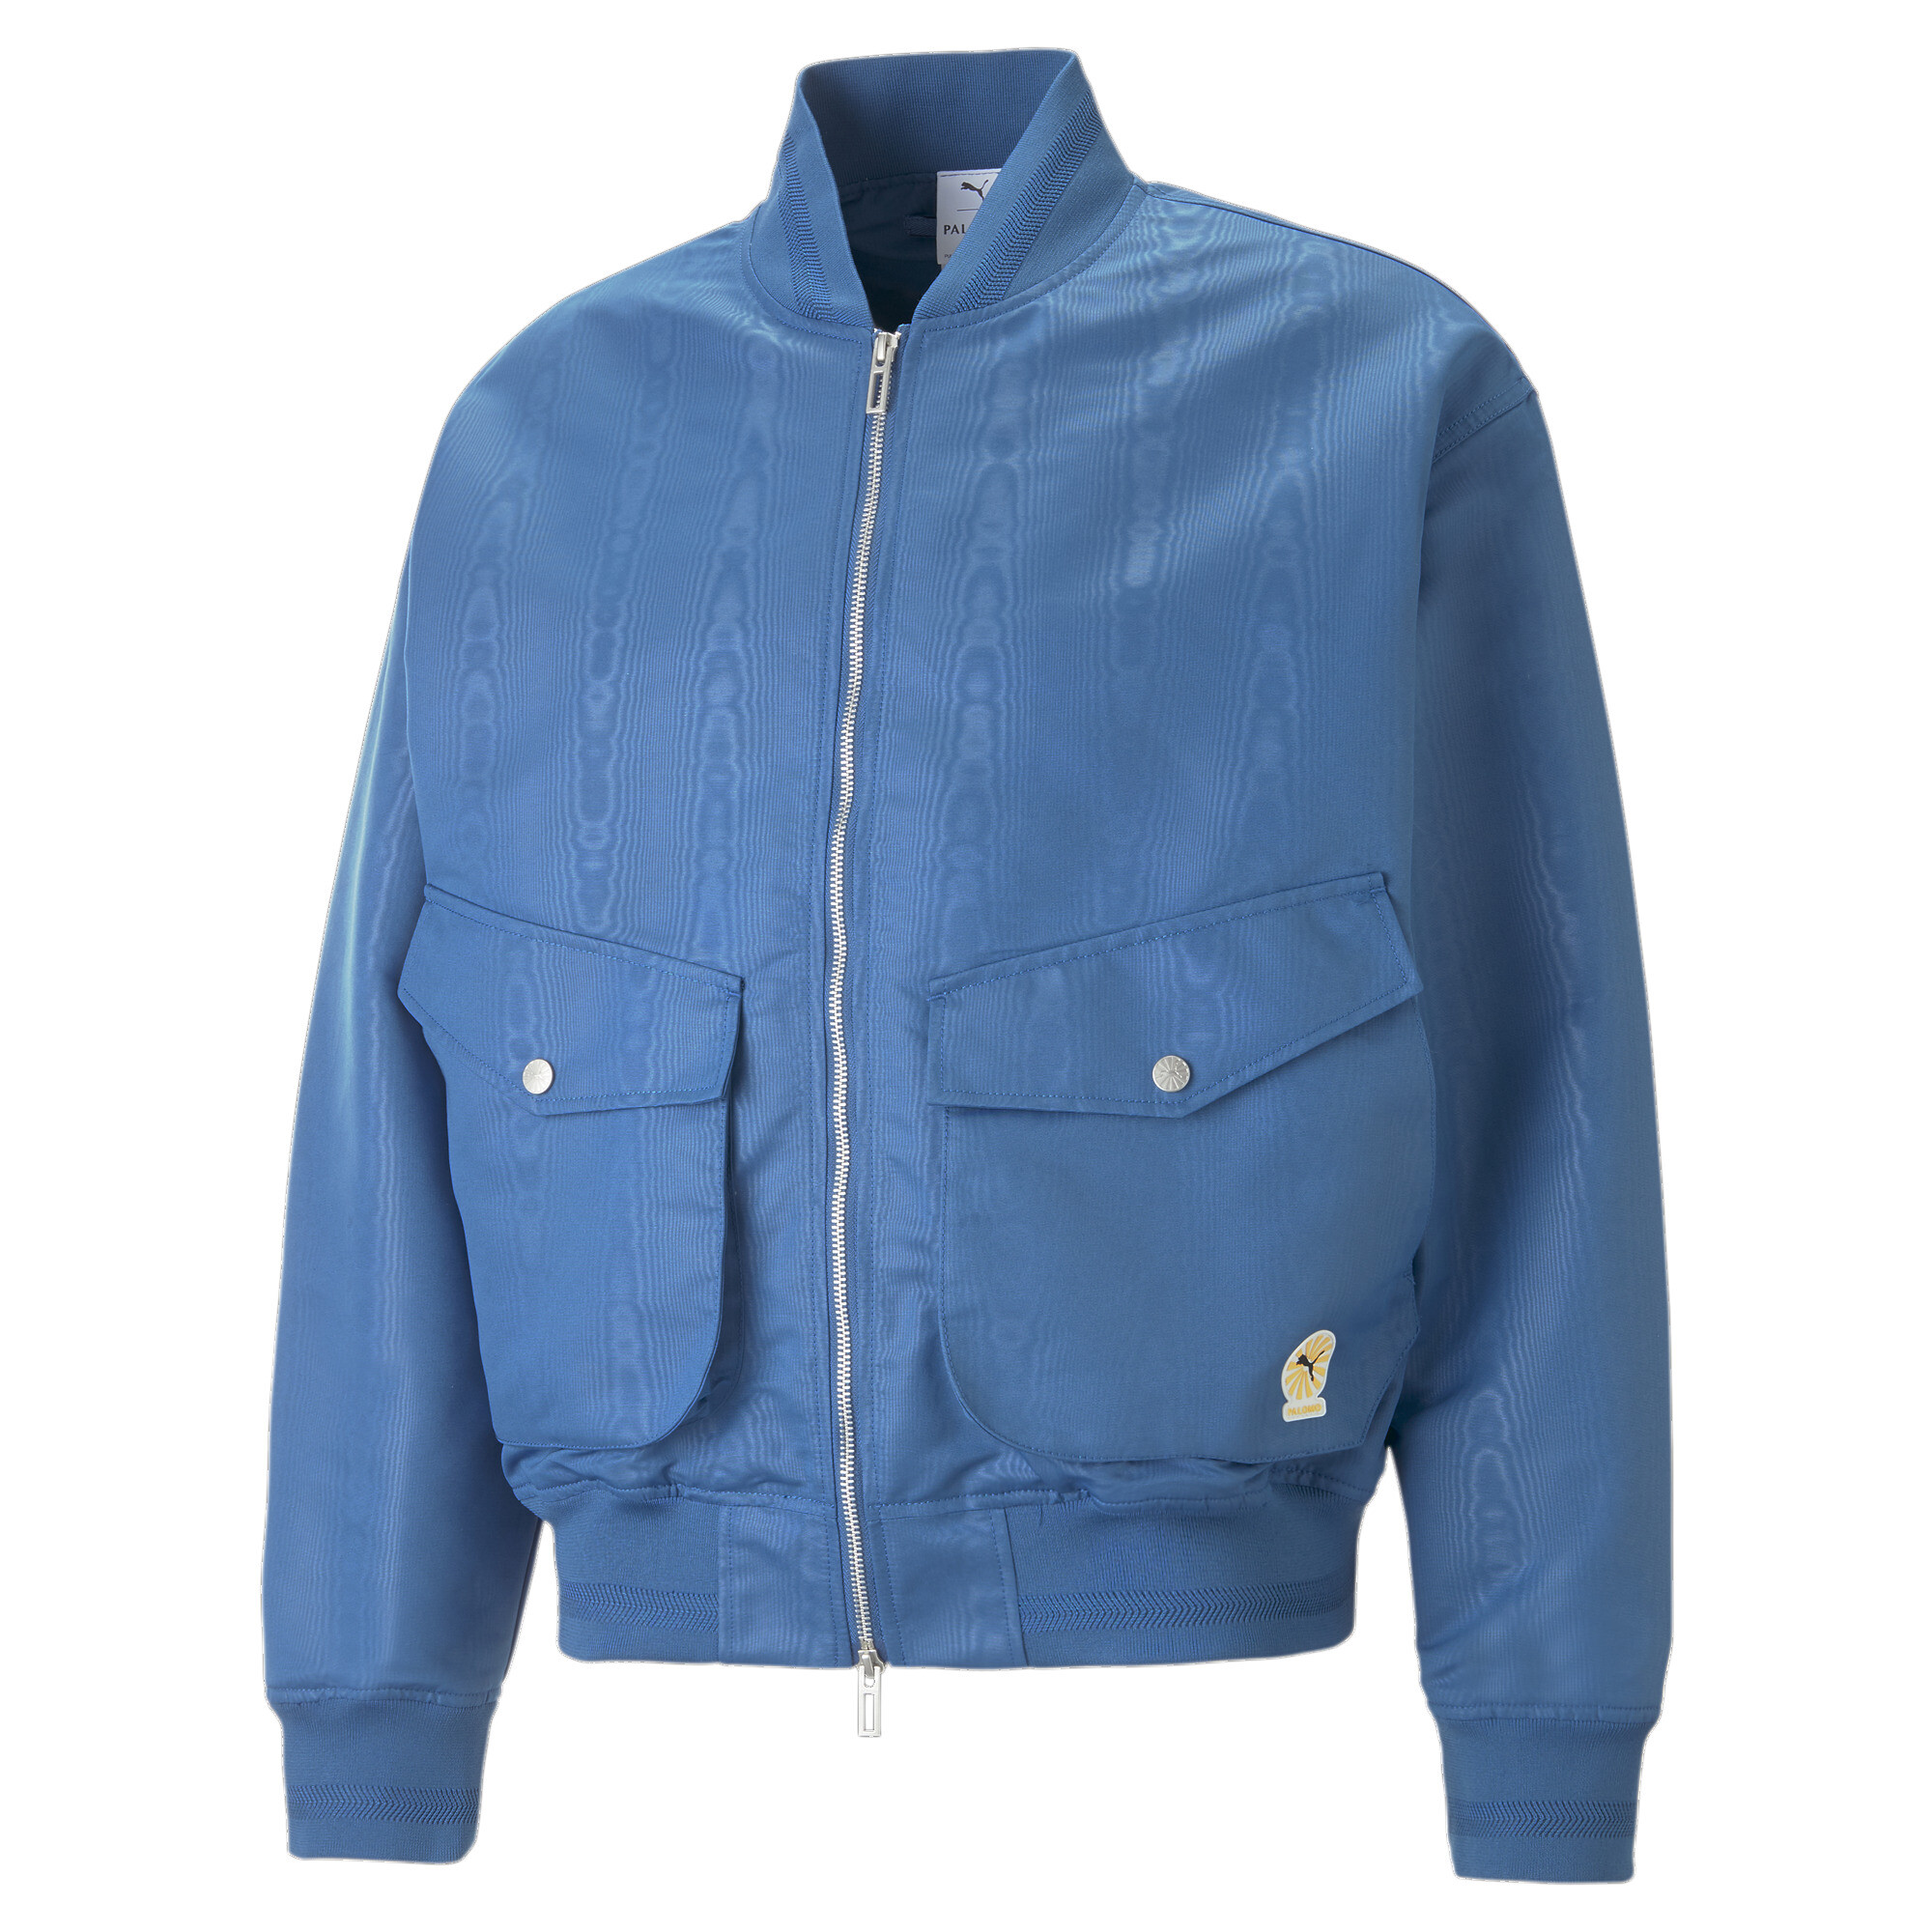 Men's PUMA X PALOMO Jacket In Blue, Size XS